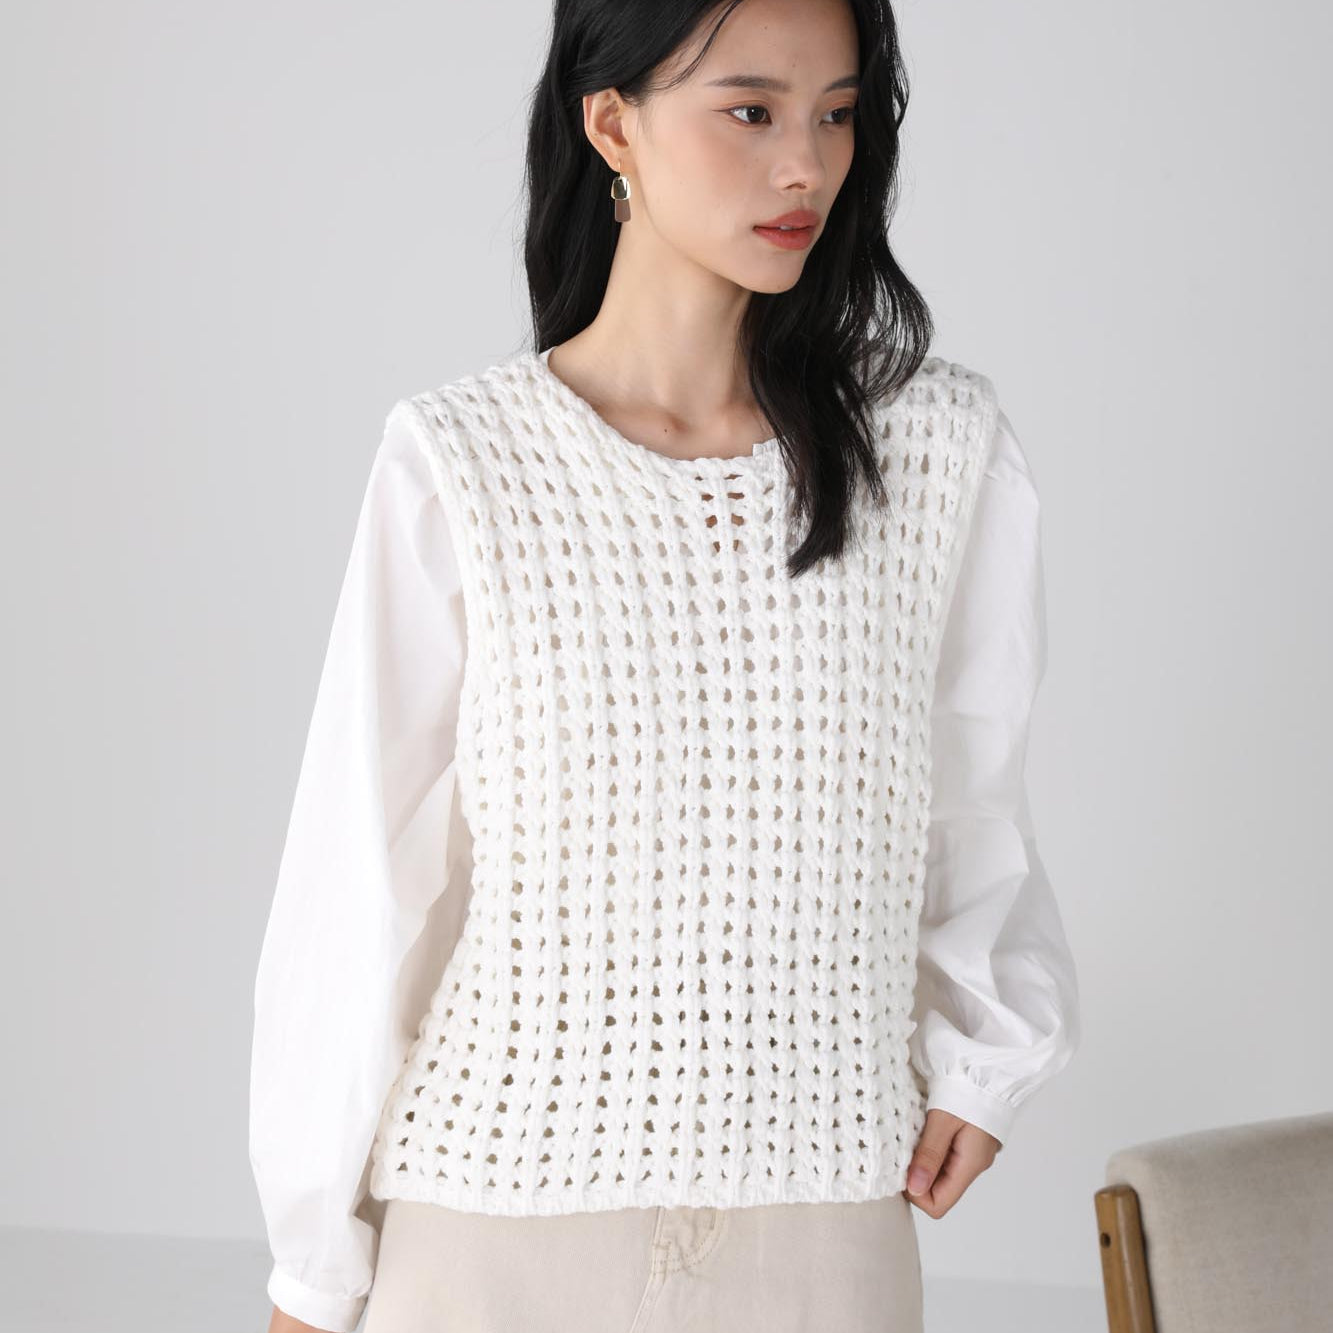 Evie heavy knit white vest top